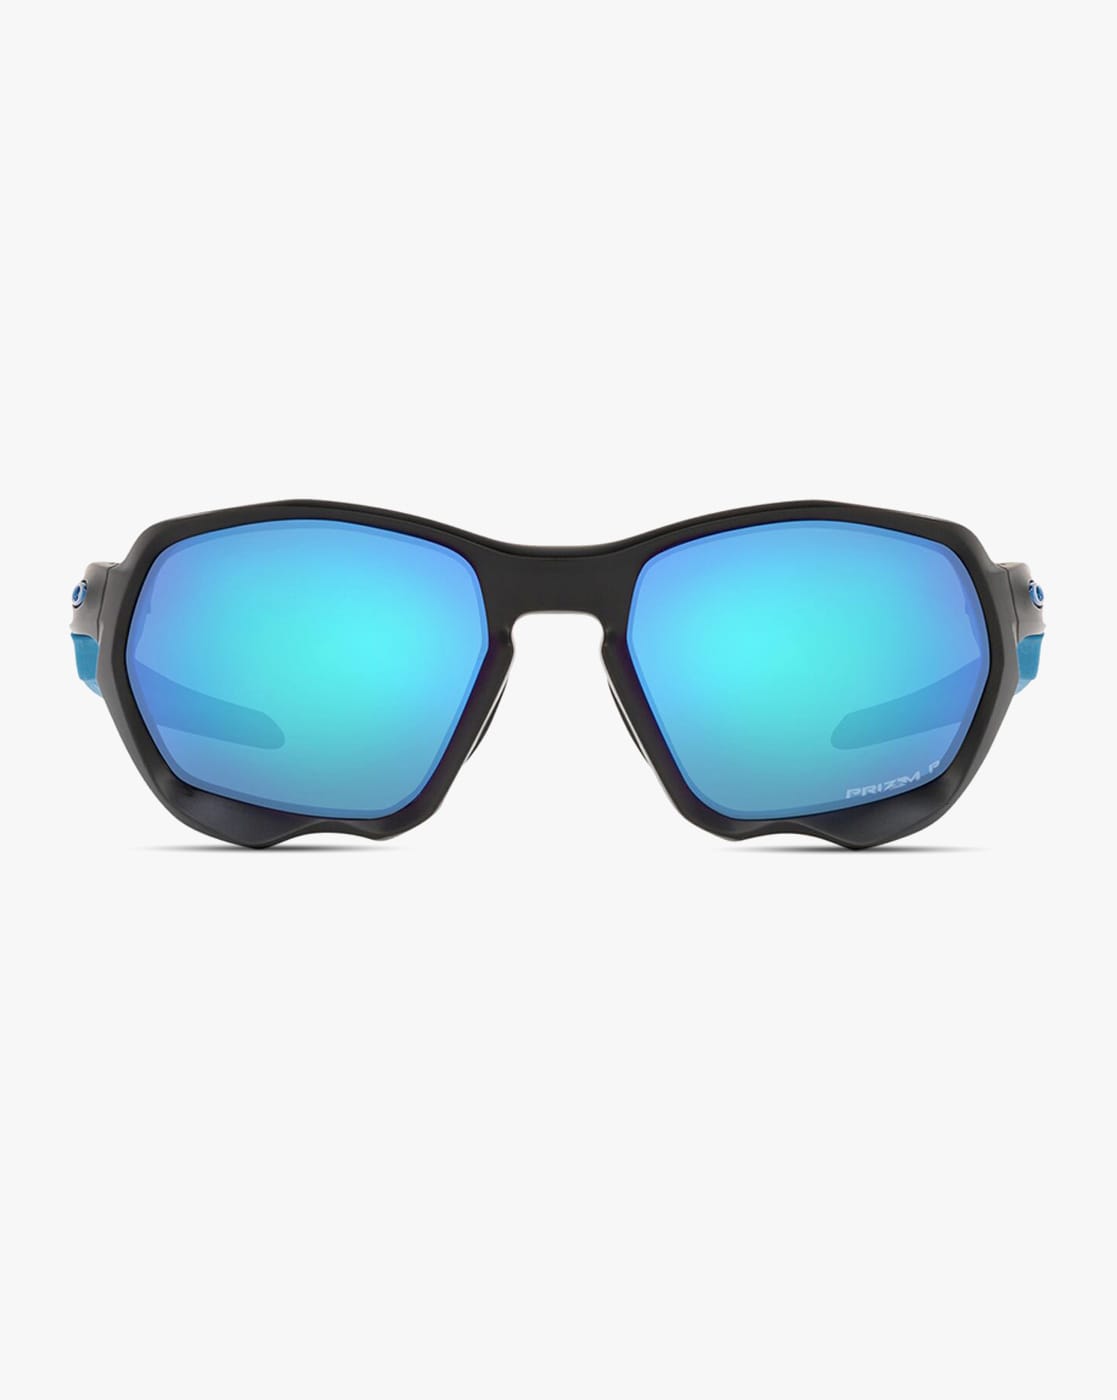 oakley sunglasses – ANsunglasses.com